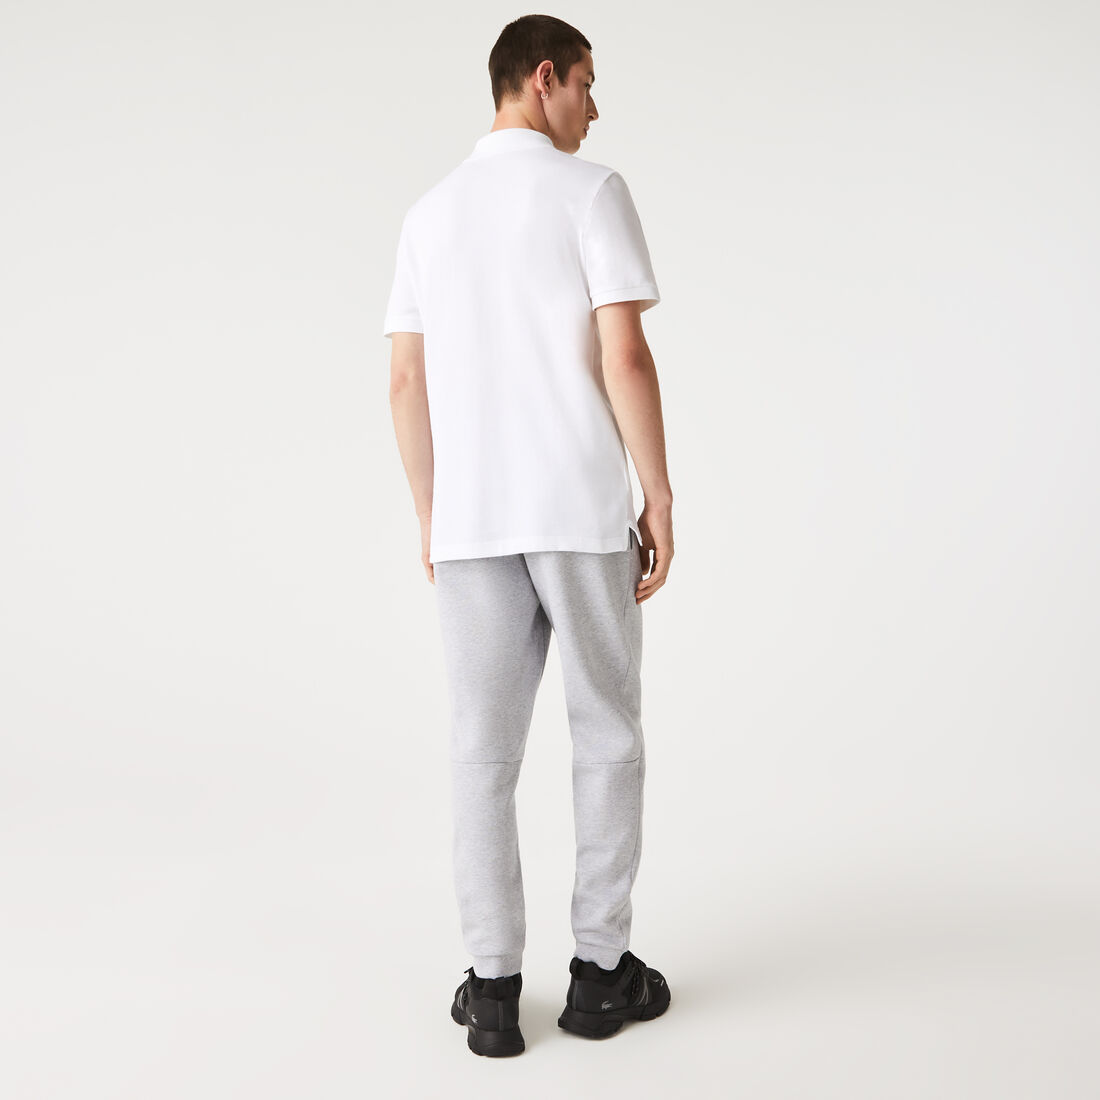 Lacoste Slim Fit In Petit Piqué Polo Shirts Herren Weiß | XYUE-76459